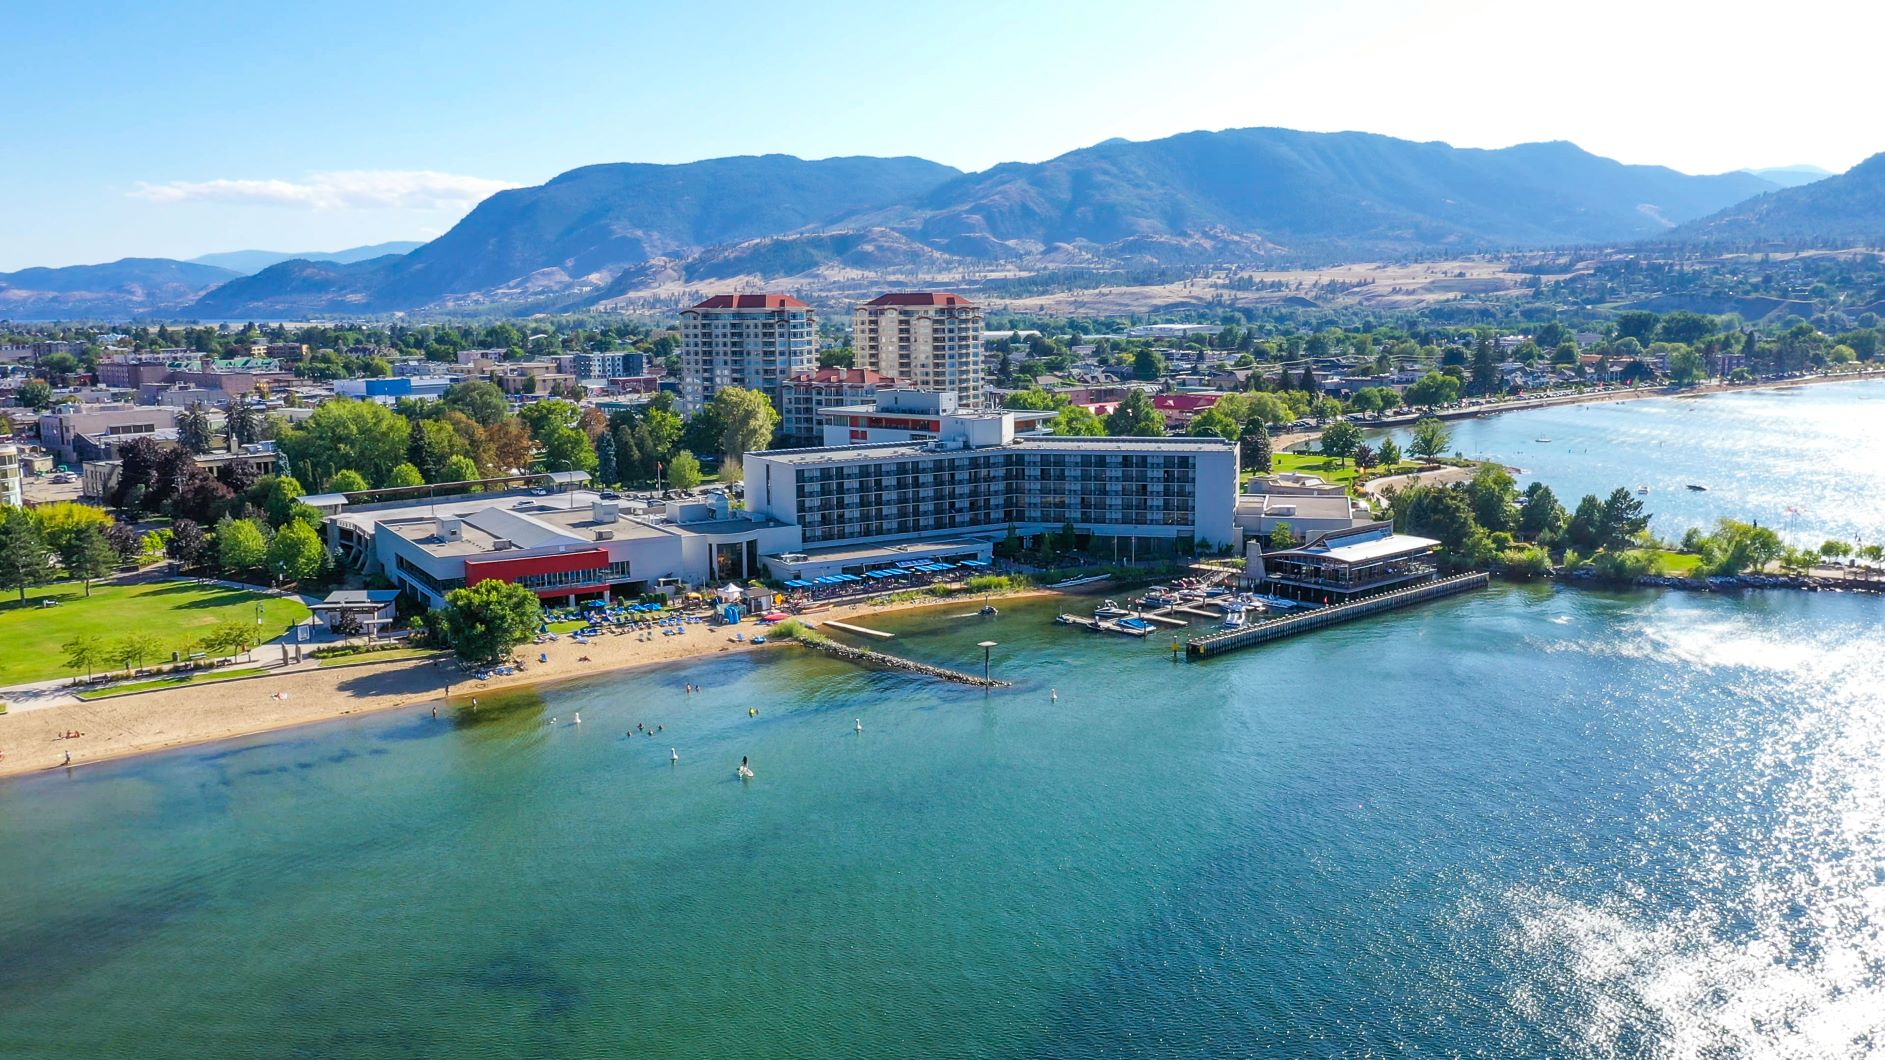 Hotels open in Penticton British Columbia in 2020